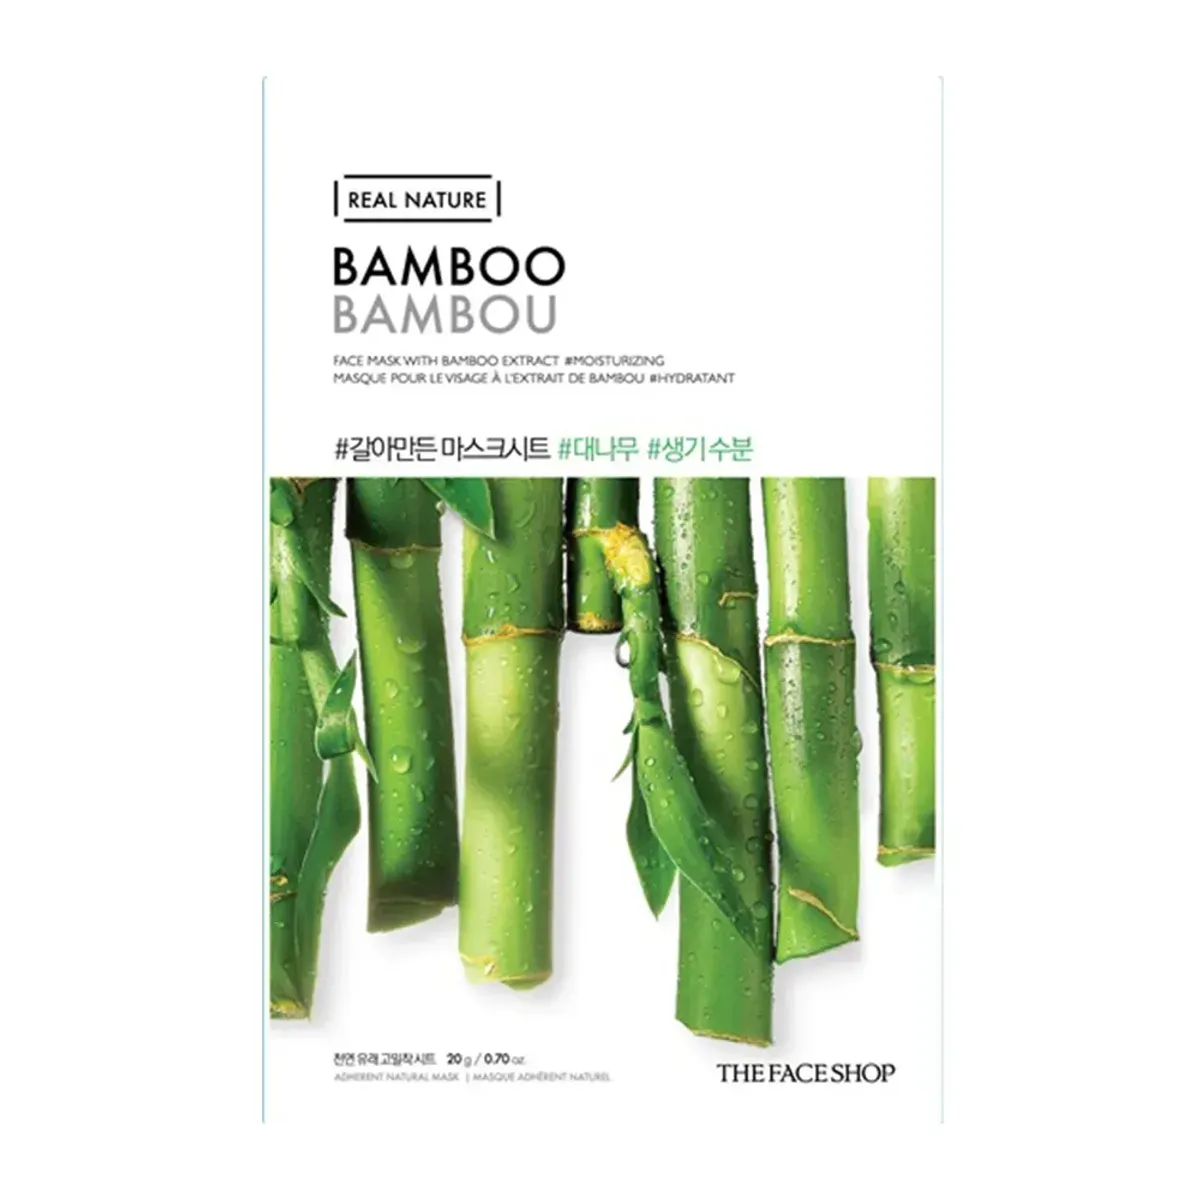 mat-na-cung-cap-nuoc-tu-tre-thefaceshop-real-nature-mask-sheet-bamboo-20g-1